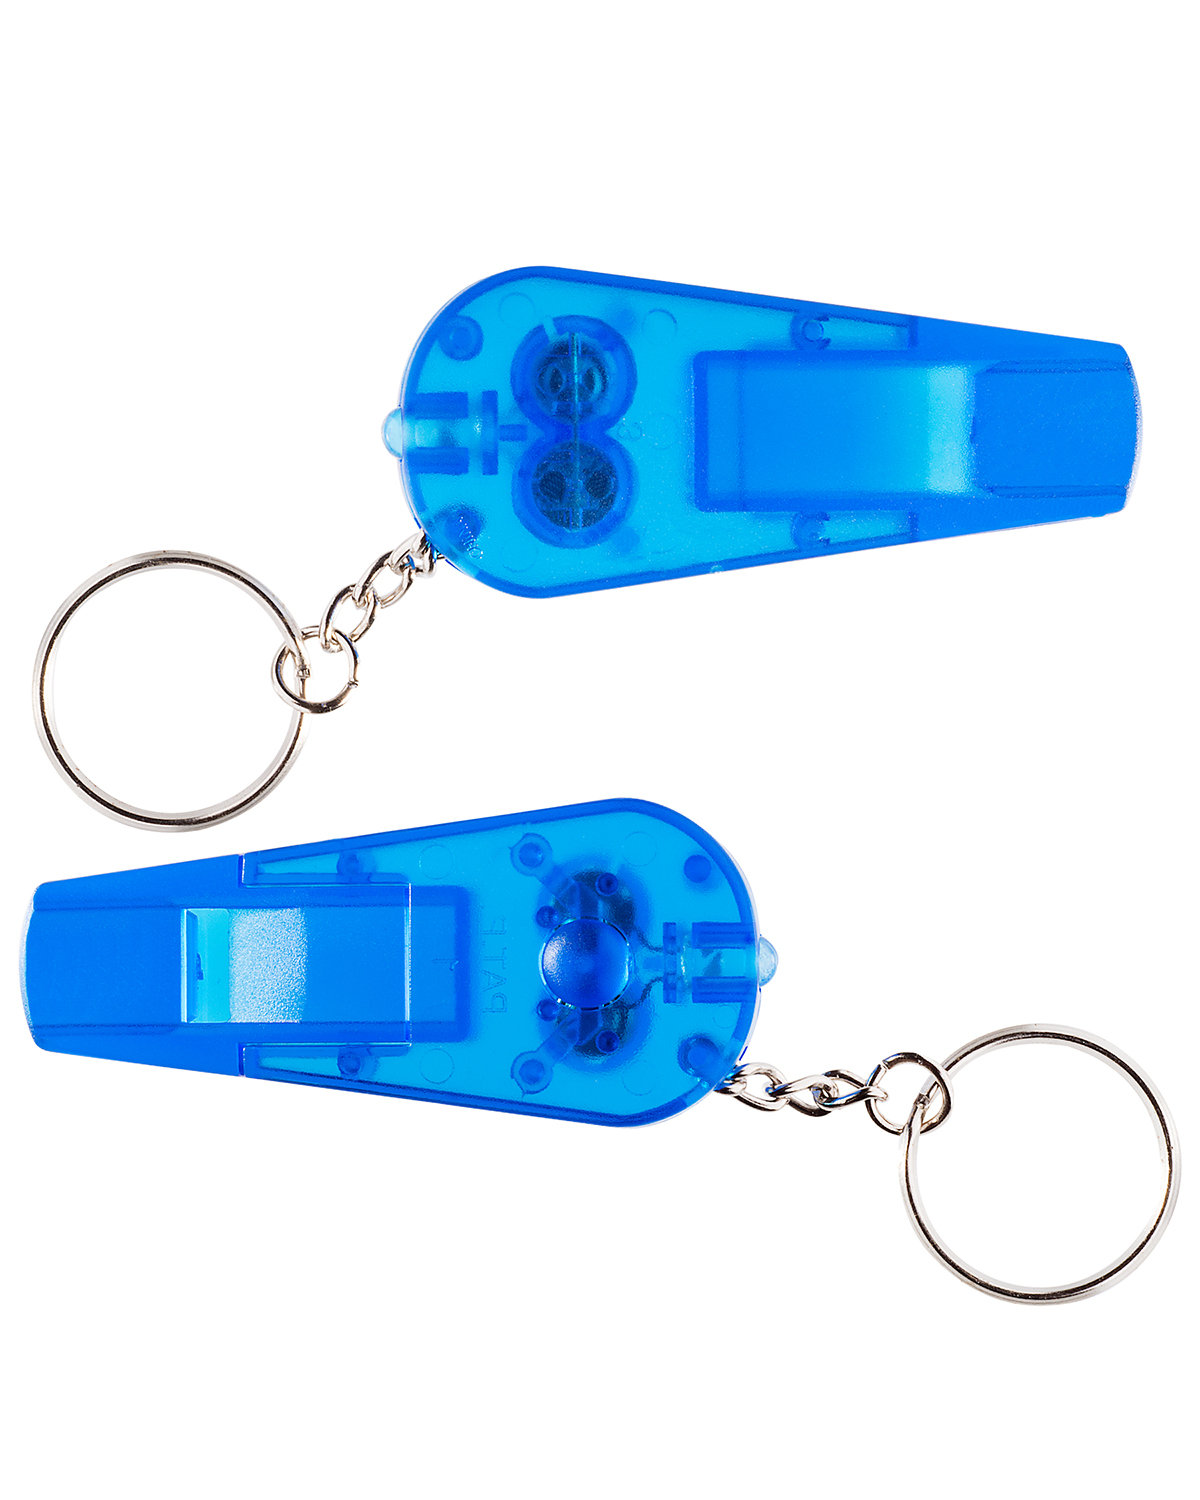 Prime Line Light 'N Whistle Key Tag translucent blue 